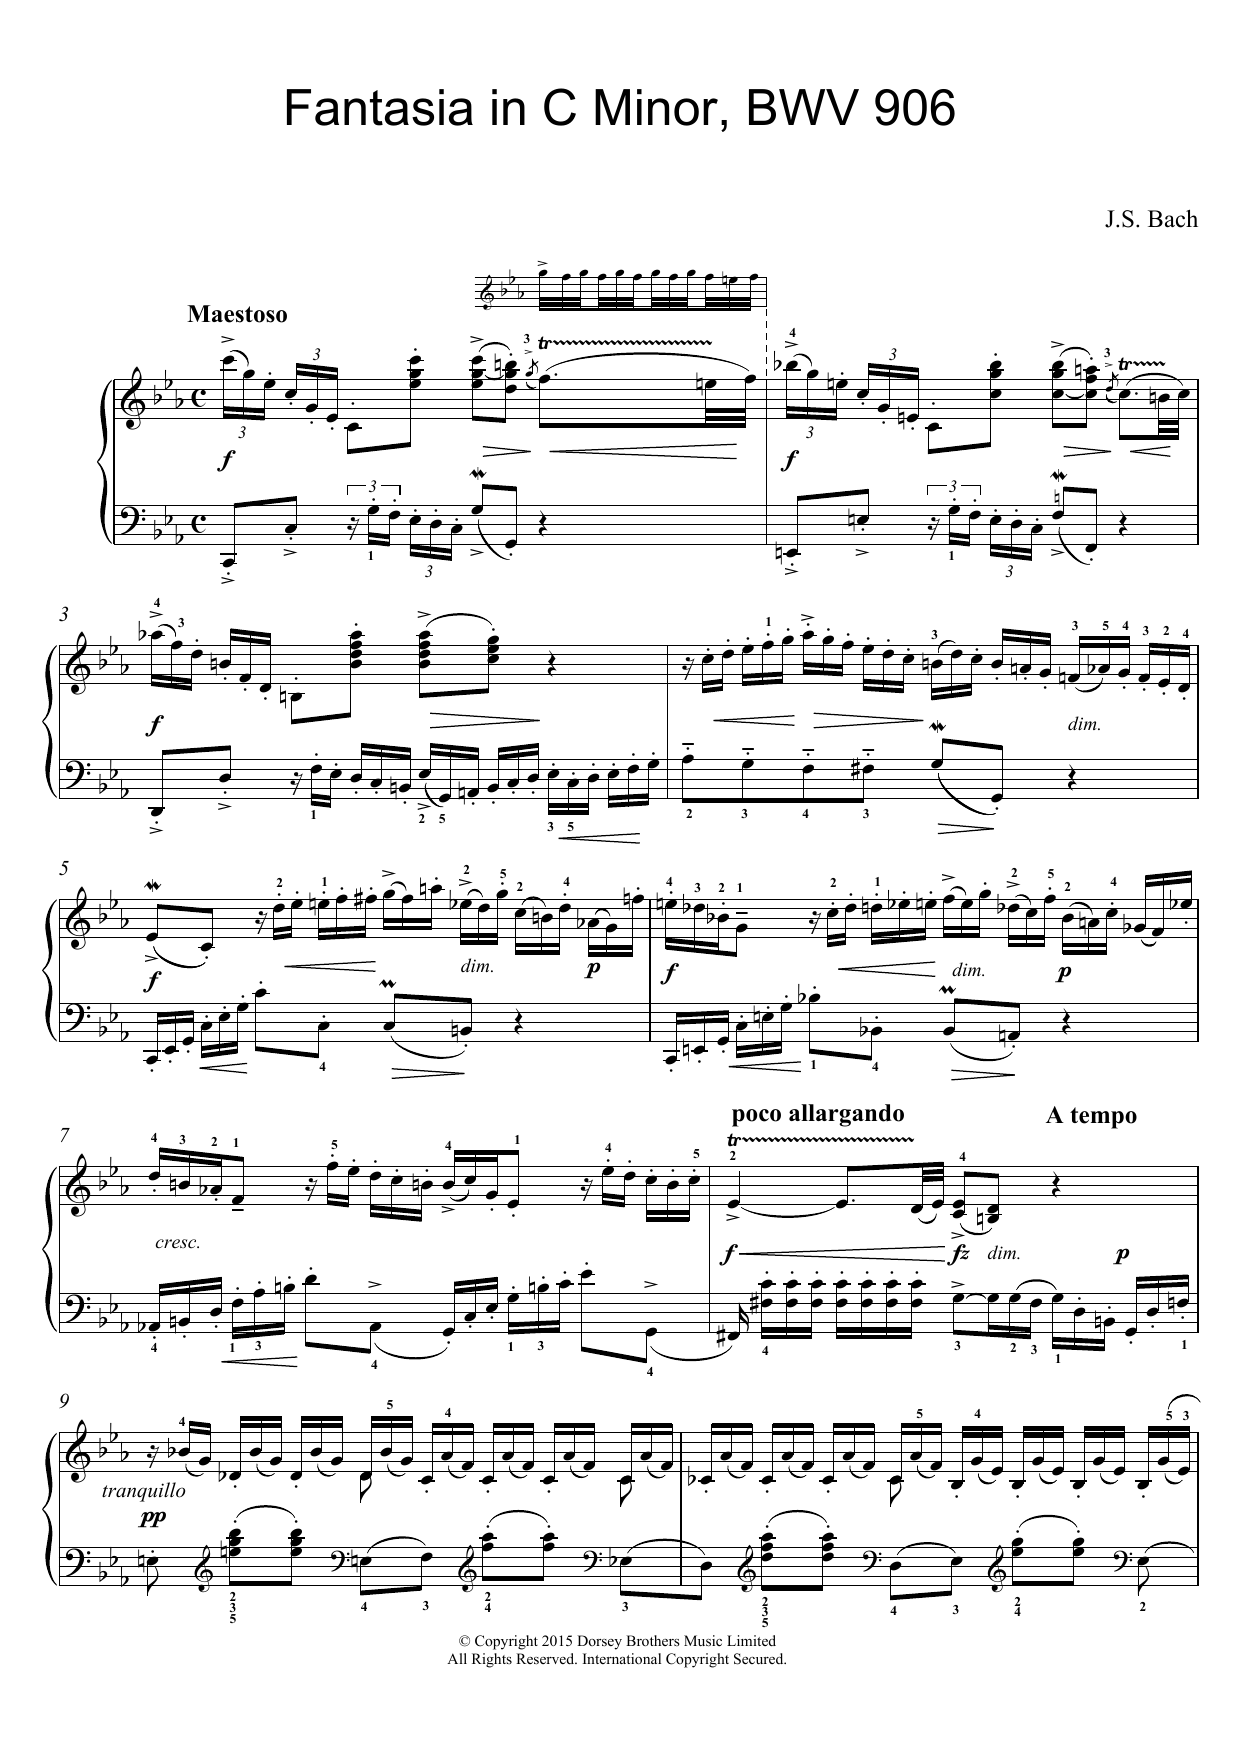 Johann Sebastian Bach Fantasia in C Minor, BWV 906 Sheet Music Notes & Chords for Piano - Download or Print PDF